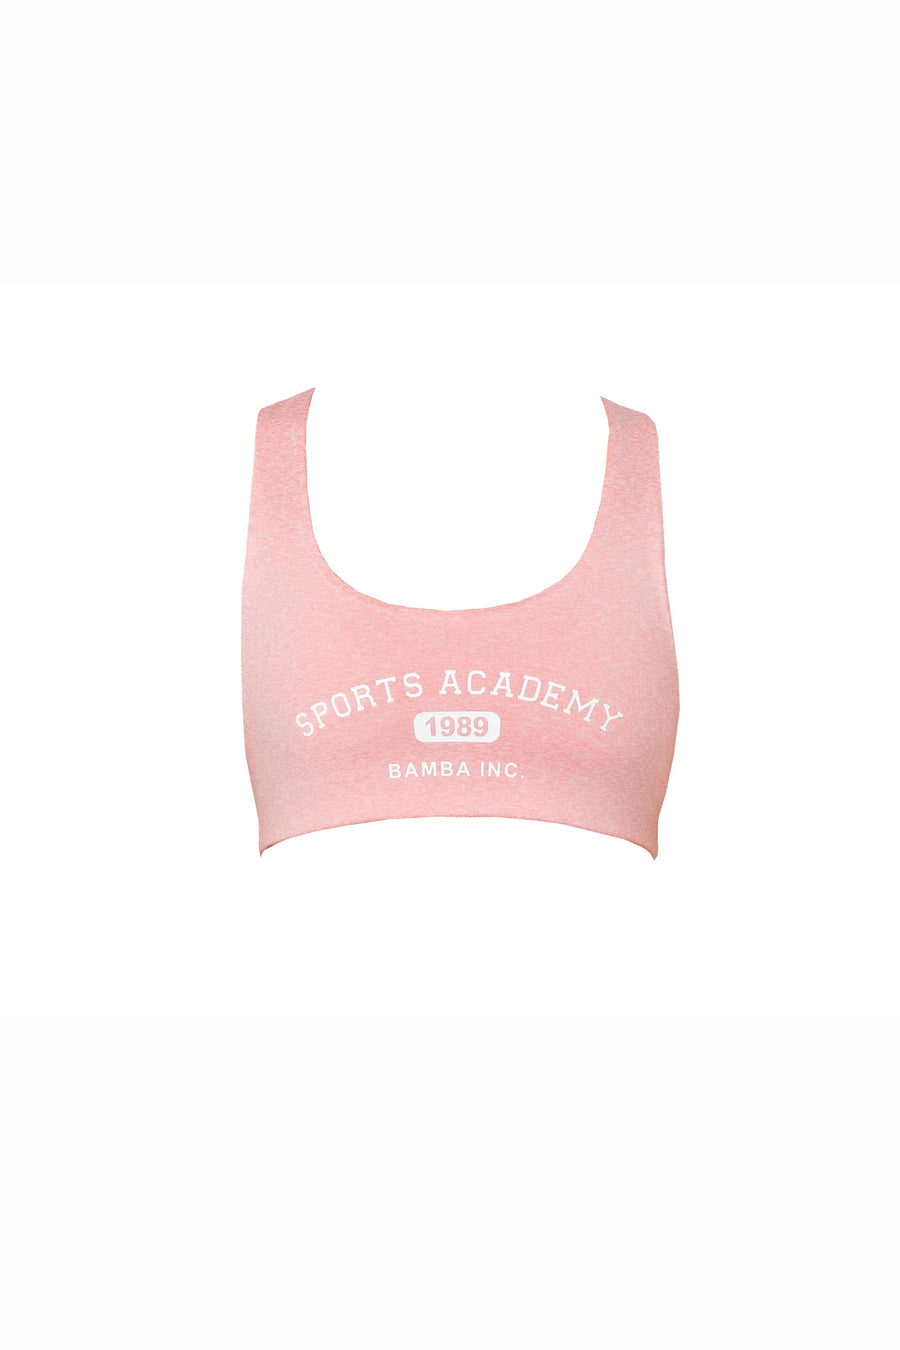 Sports Academy Bra - pink marle/ wht  -  CLOTHING  -  B Ā M B A S W I M